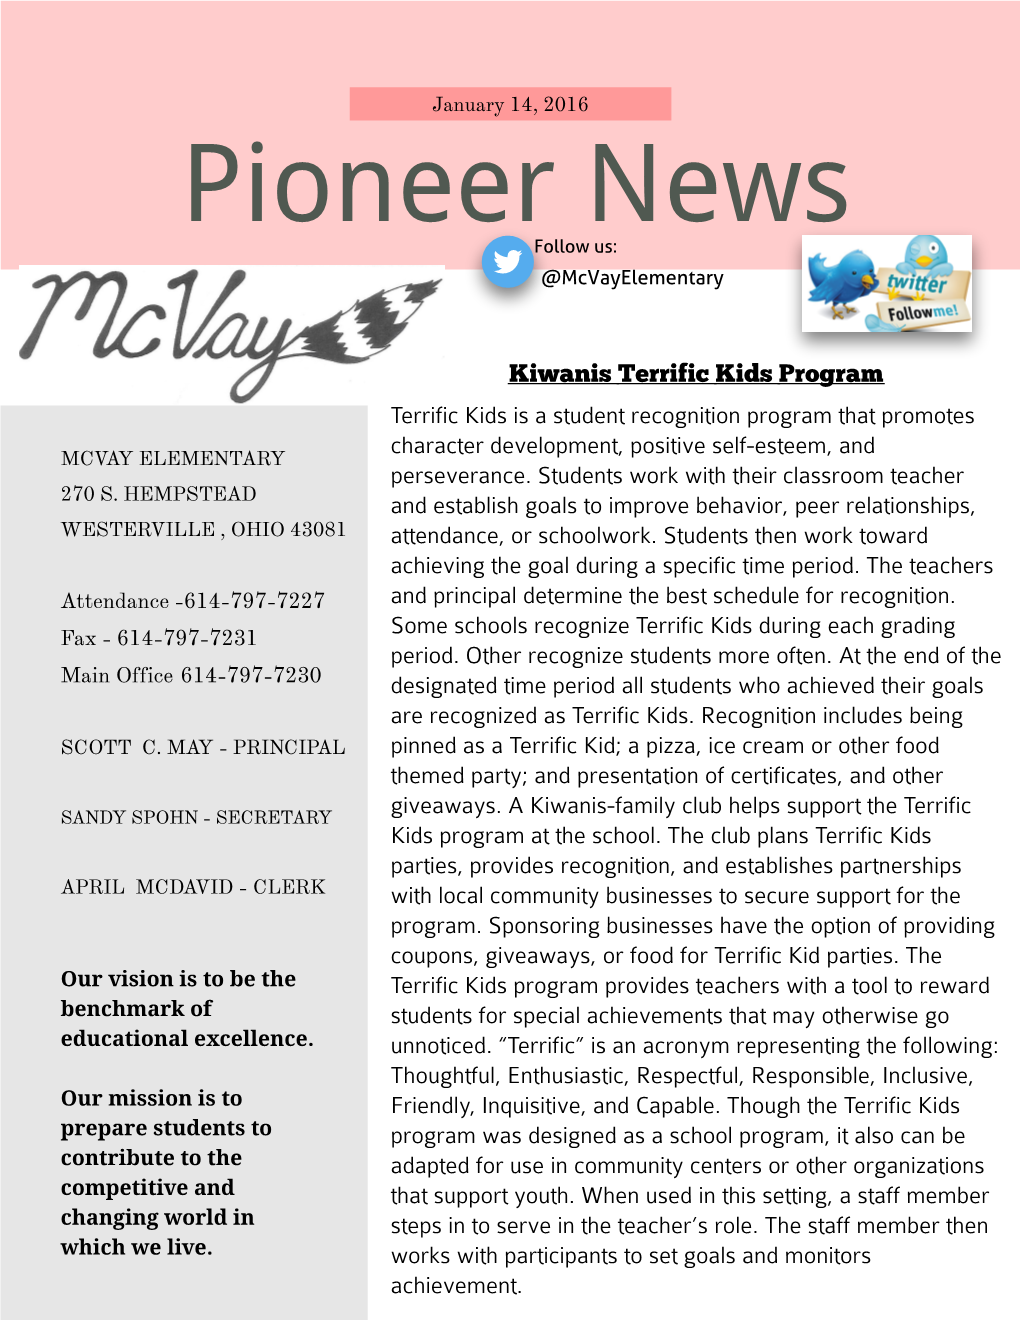 Pioneer News Follow Us: @Mcvayelementary